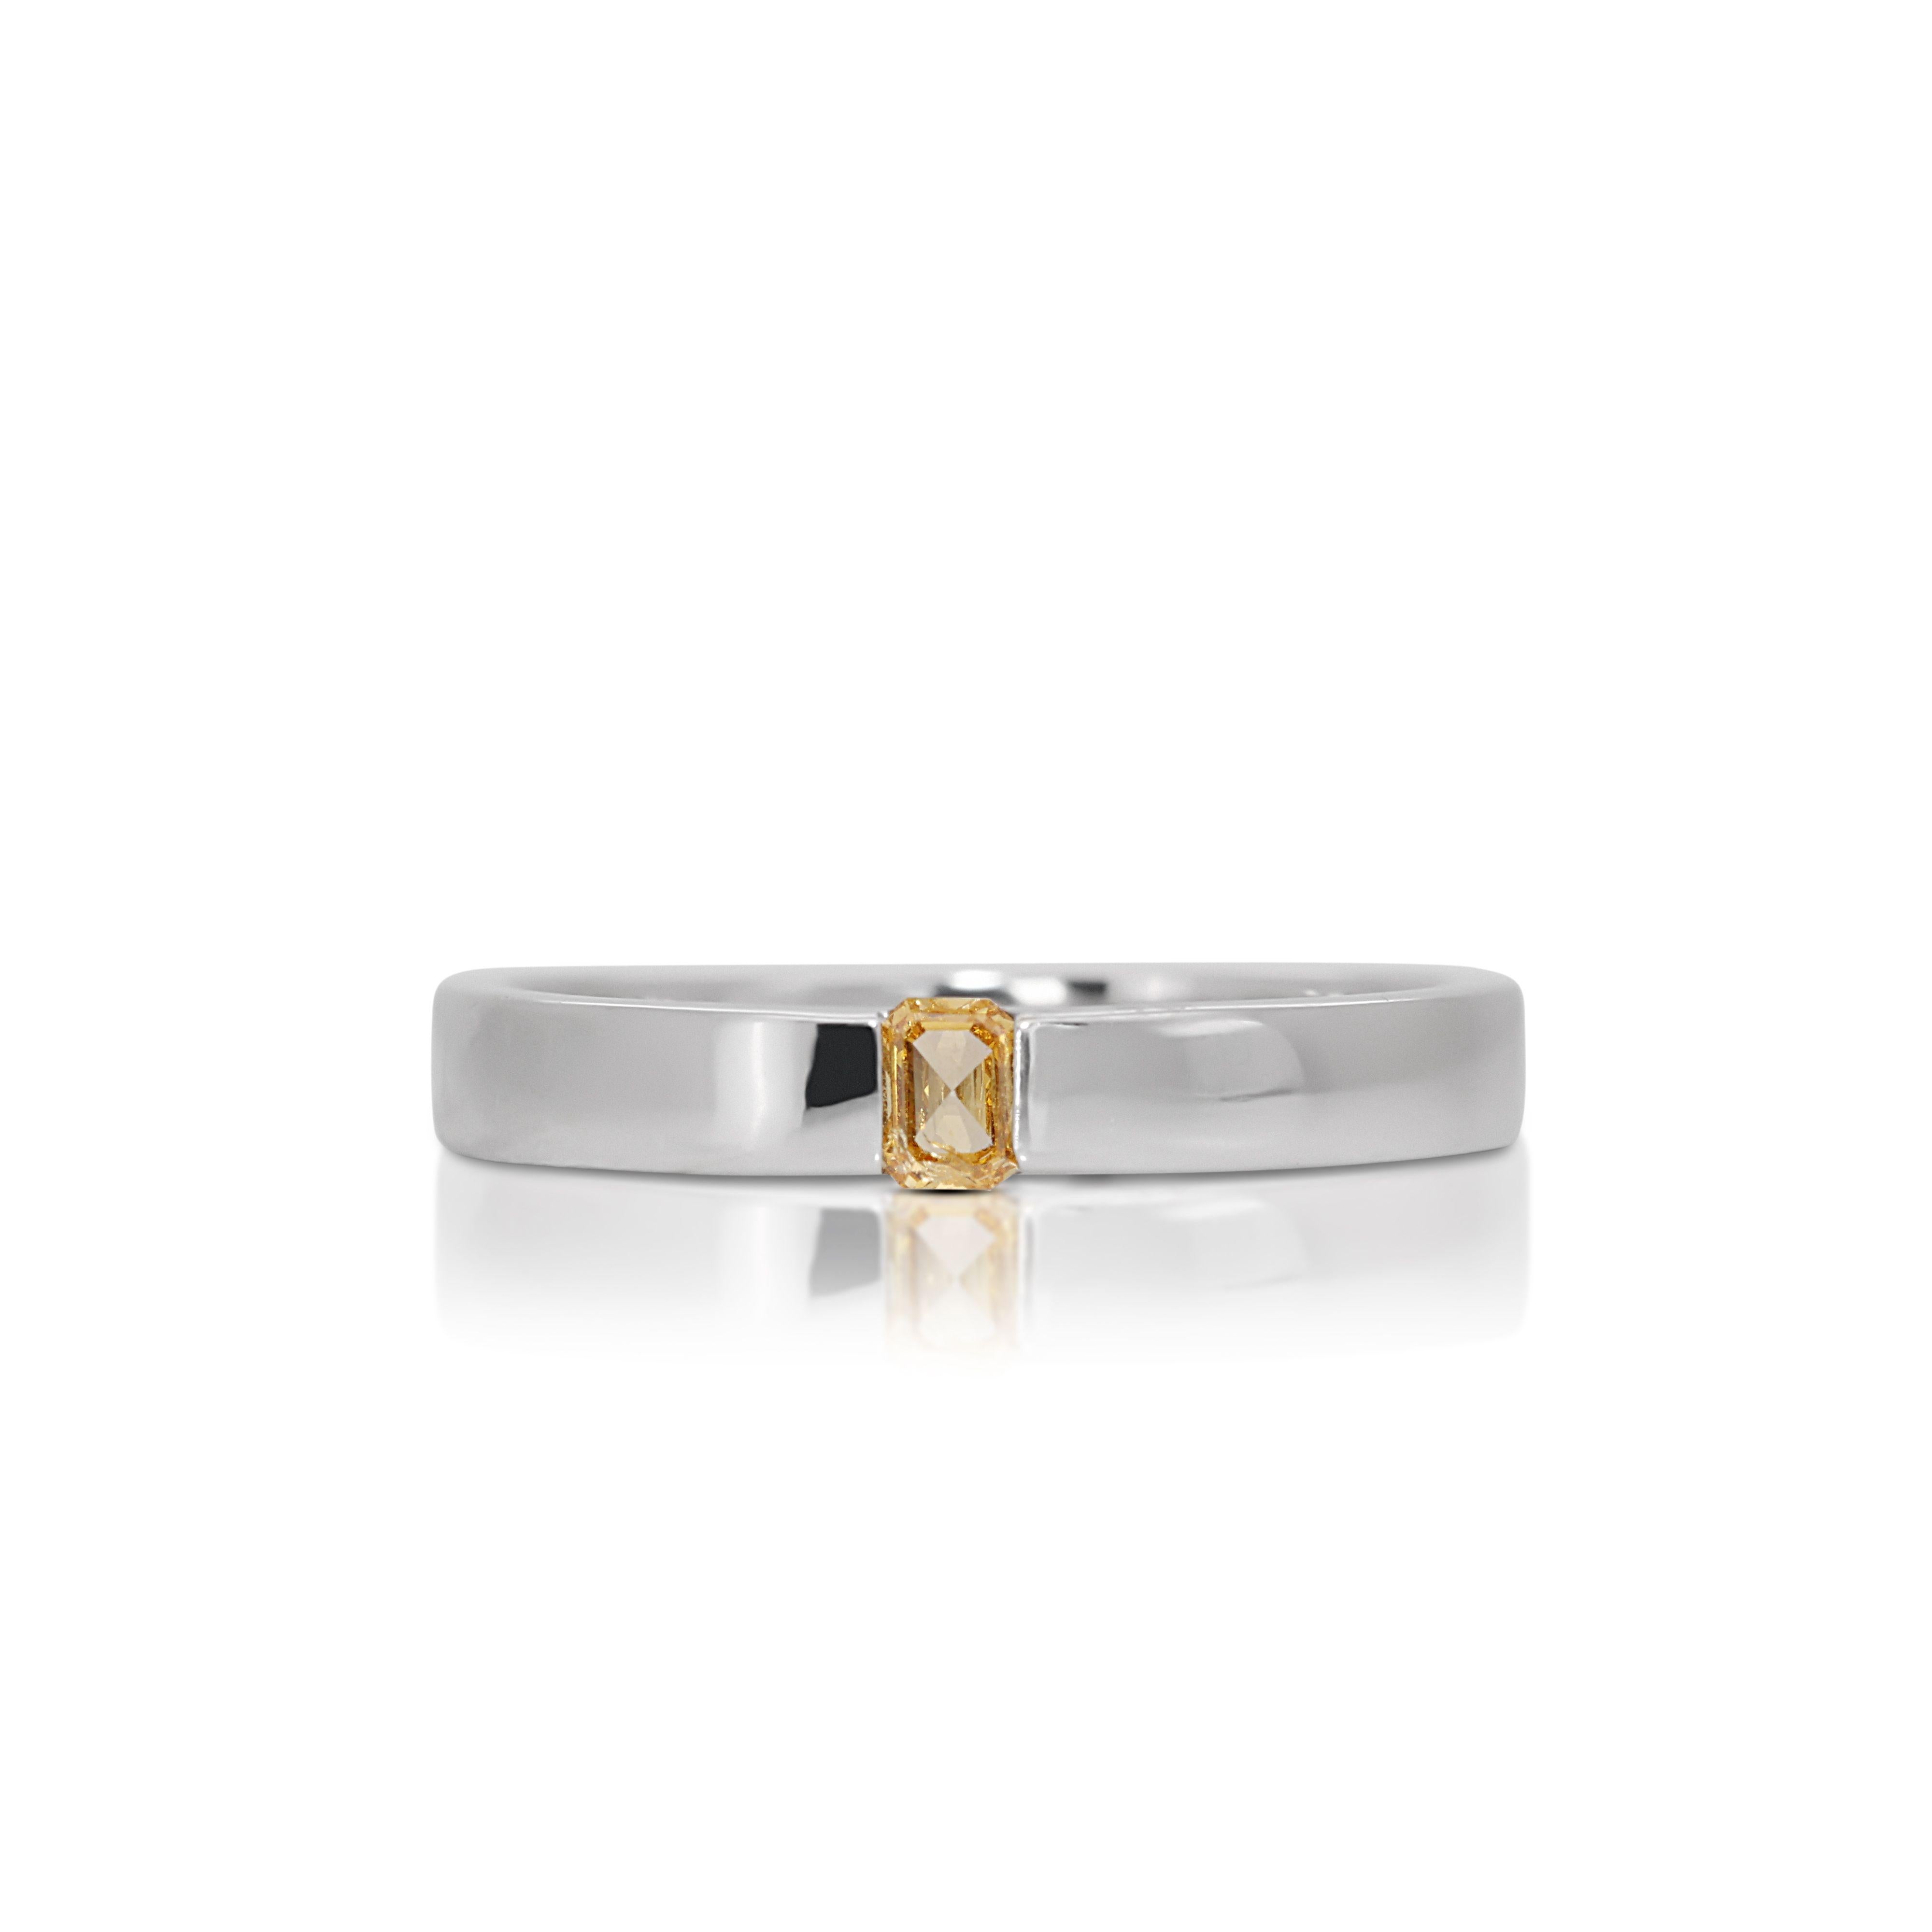 Stunning 18k White Gold Band Ring with 0.10 Ct Natural Diamonds NGI Certificate